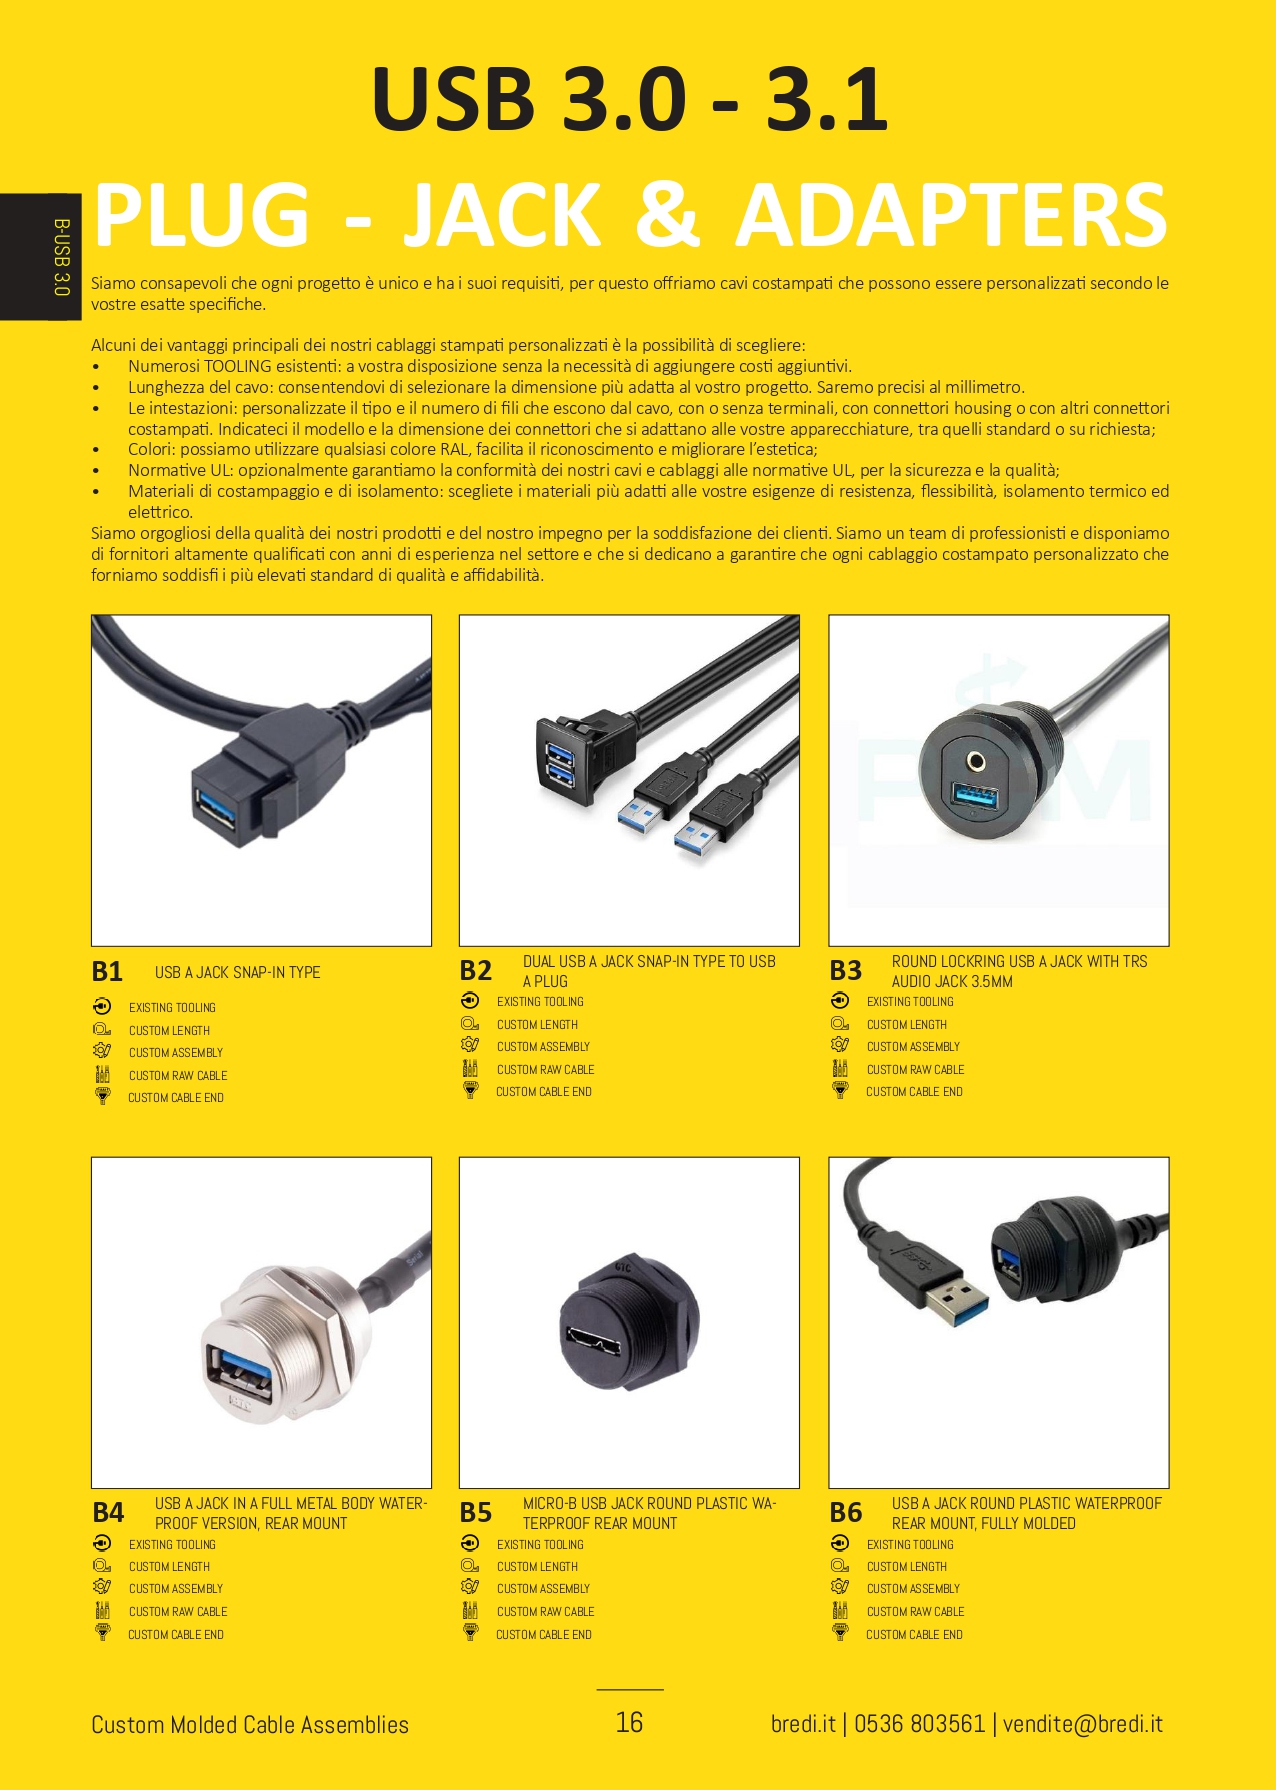 Custom Cable Assemblies USB 3.0 3.1